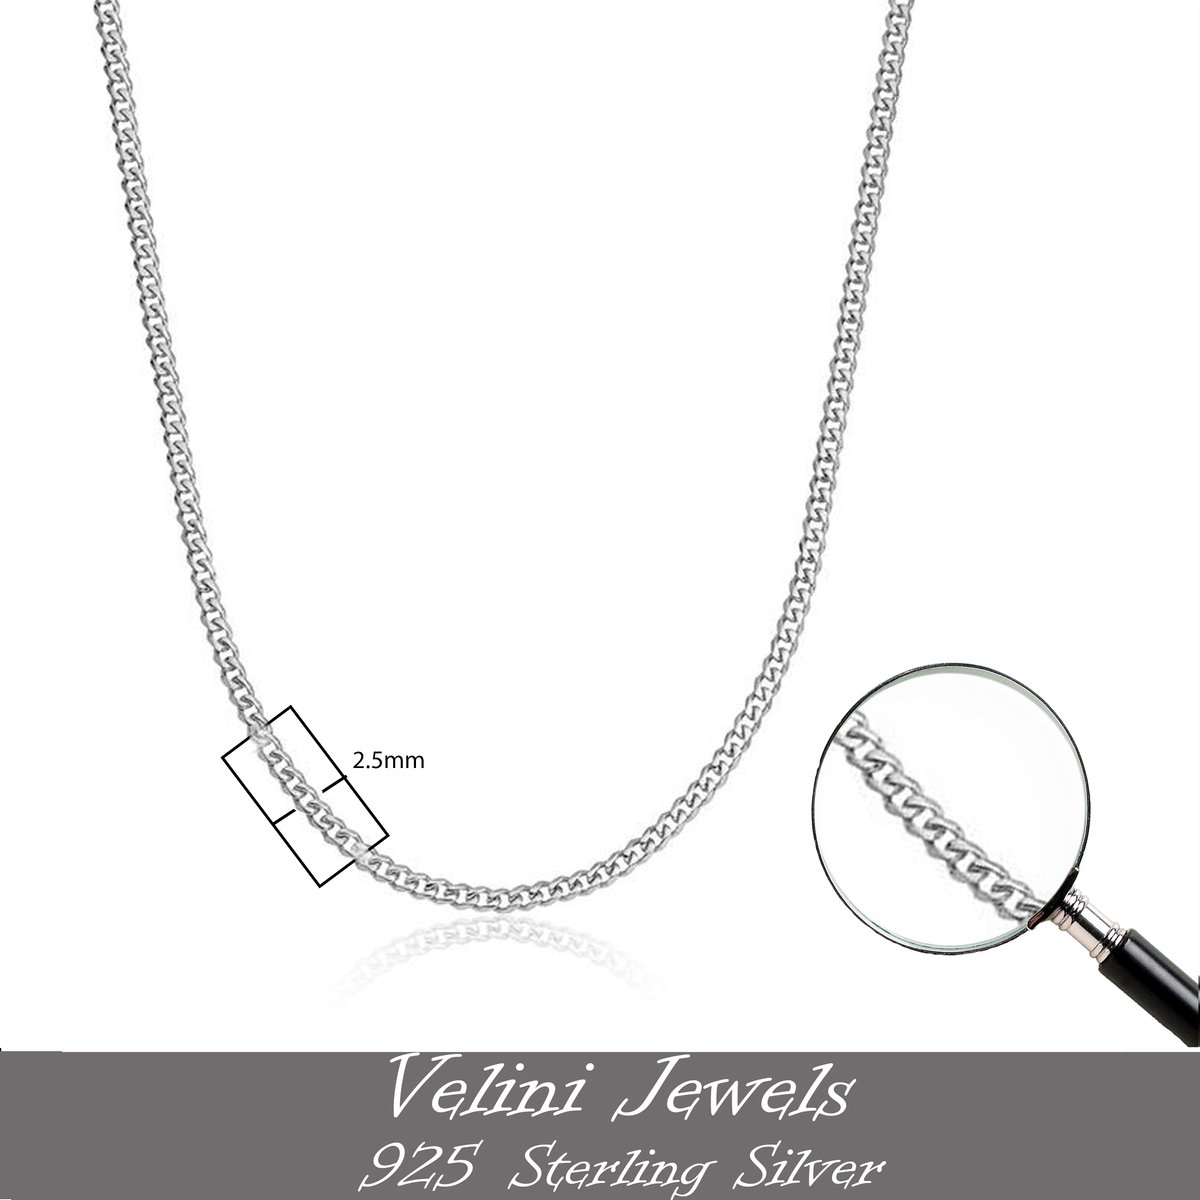 Velini jewels-2.5MM Cubaanse halsketting-925 Zilver Ketting- roestvrij ketting-60+5 CM verlenstuk met anker slot - Velini Jewels